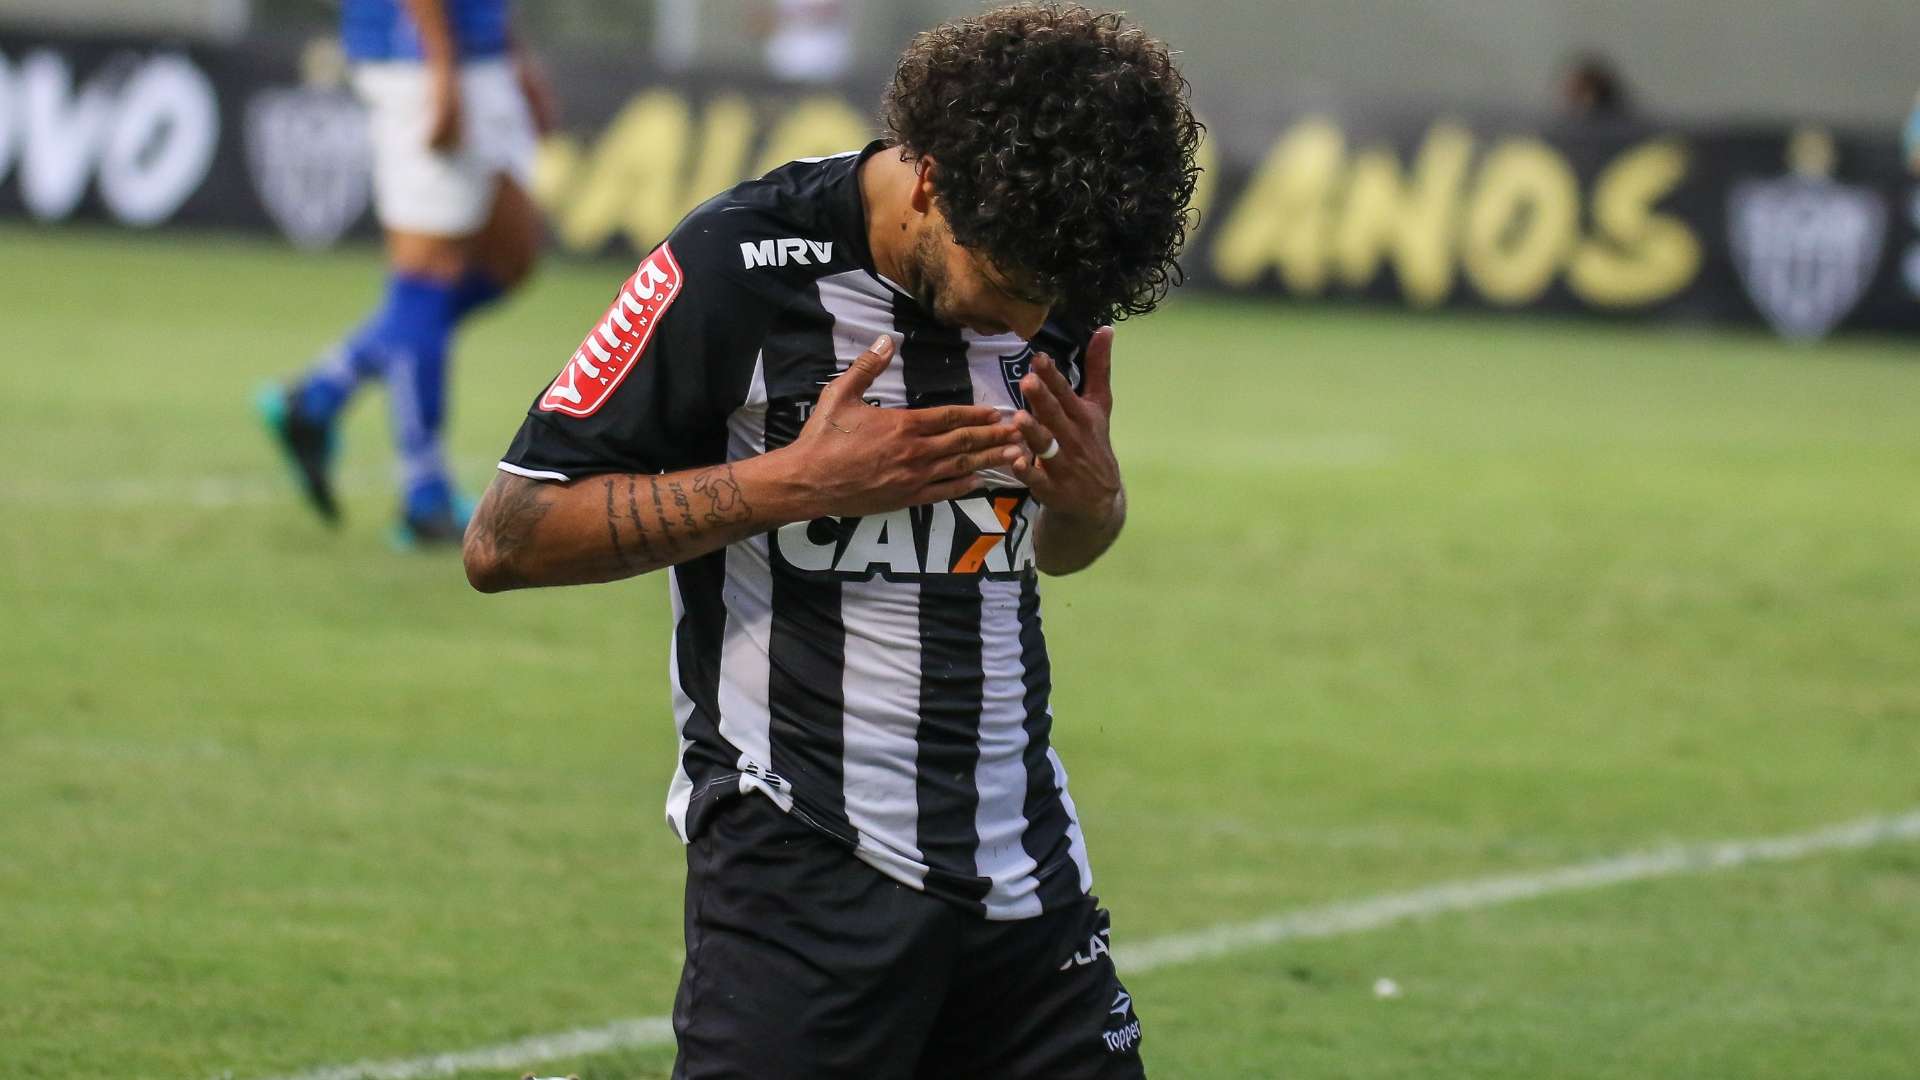 Luan Éder Aleixo Atlético-MG URT Campeonato Mineiro 26032017